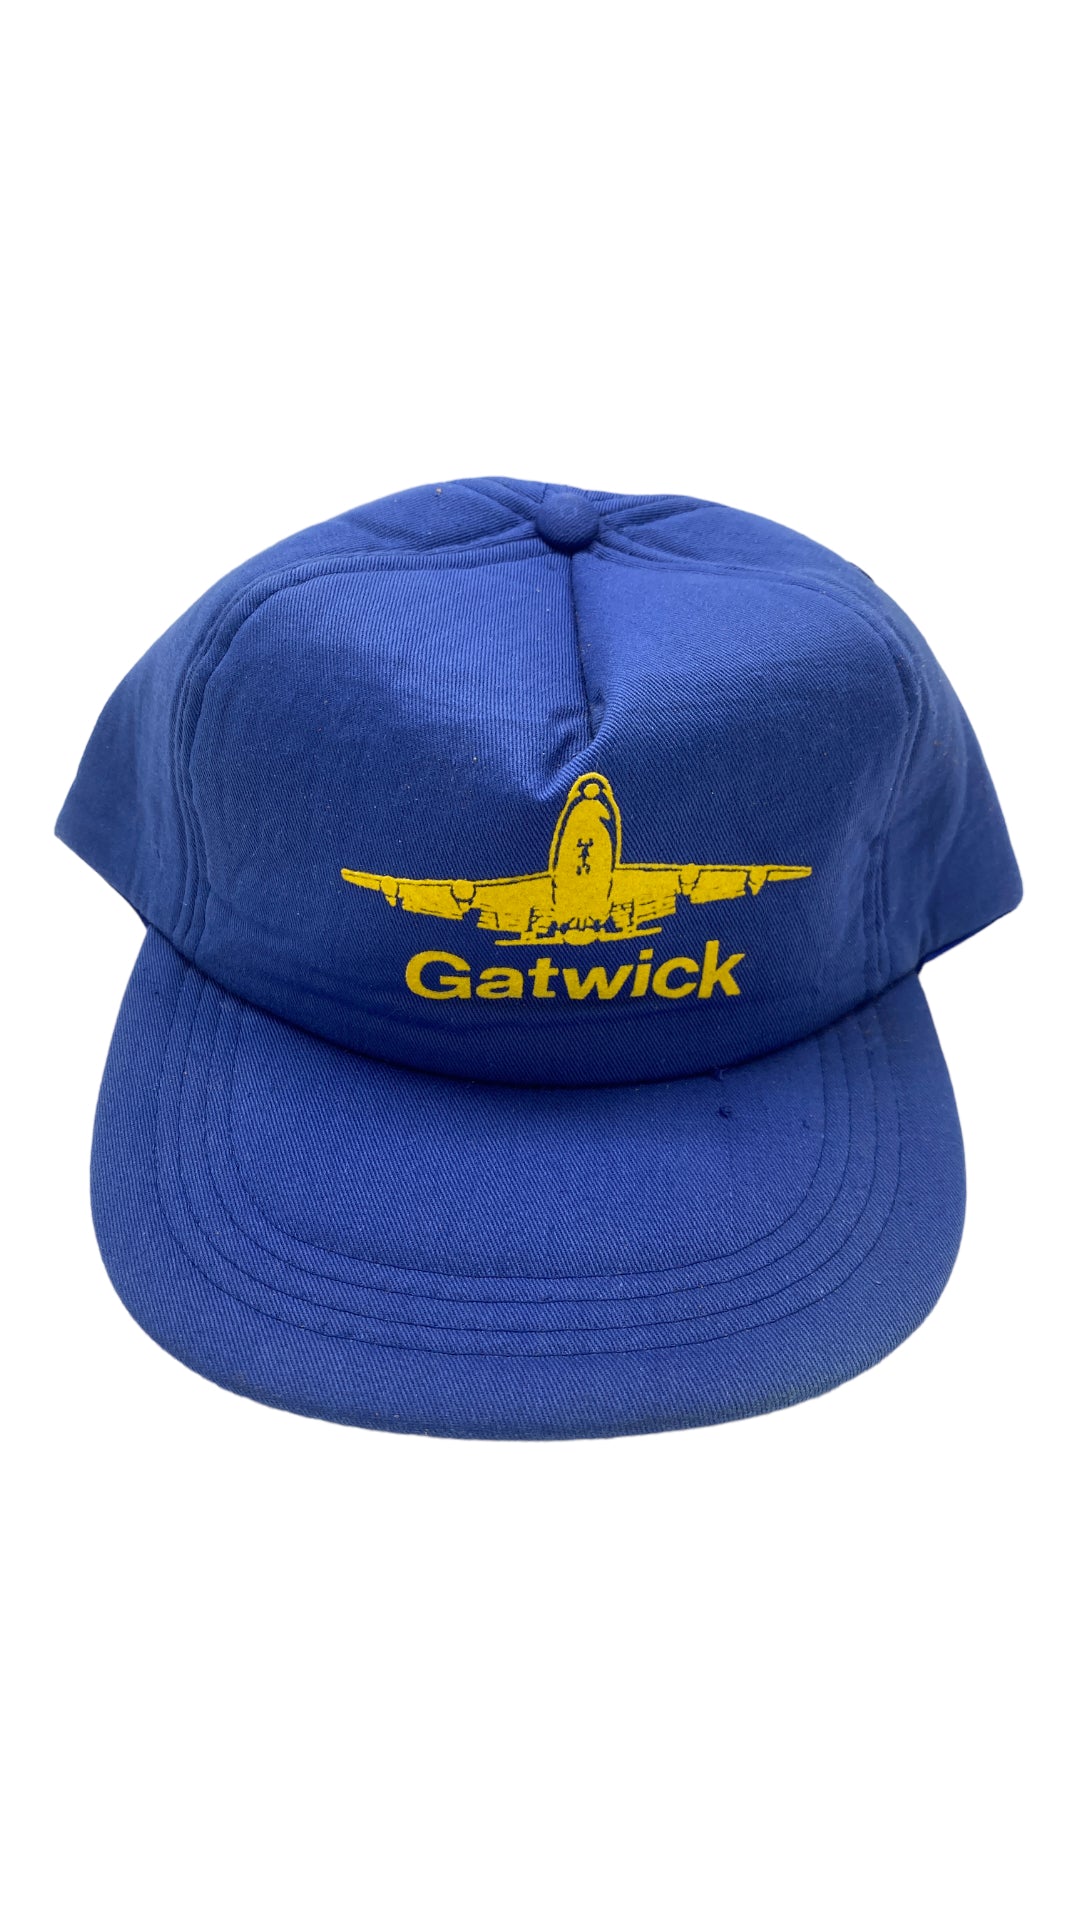 VTG Gatwick Plane Snapback Hat